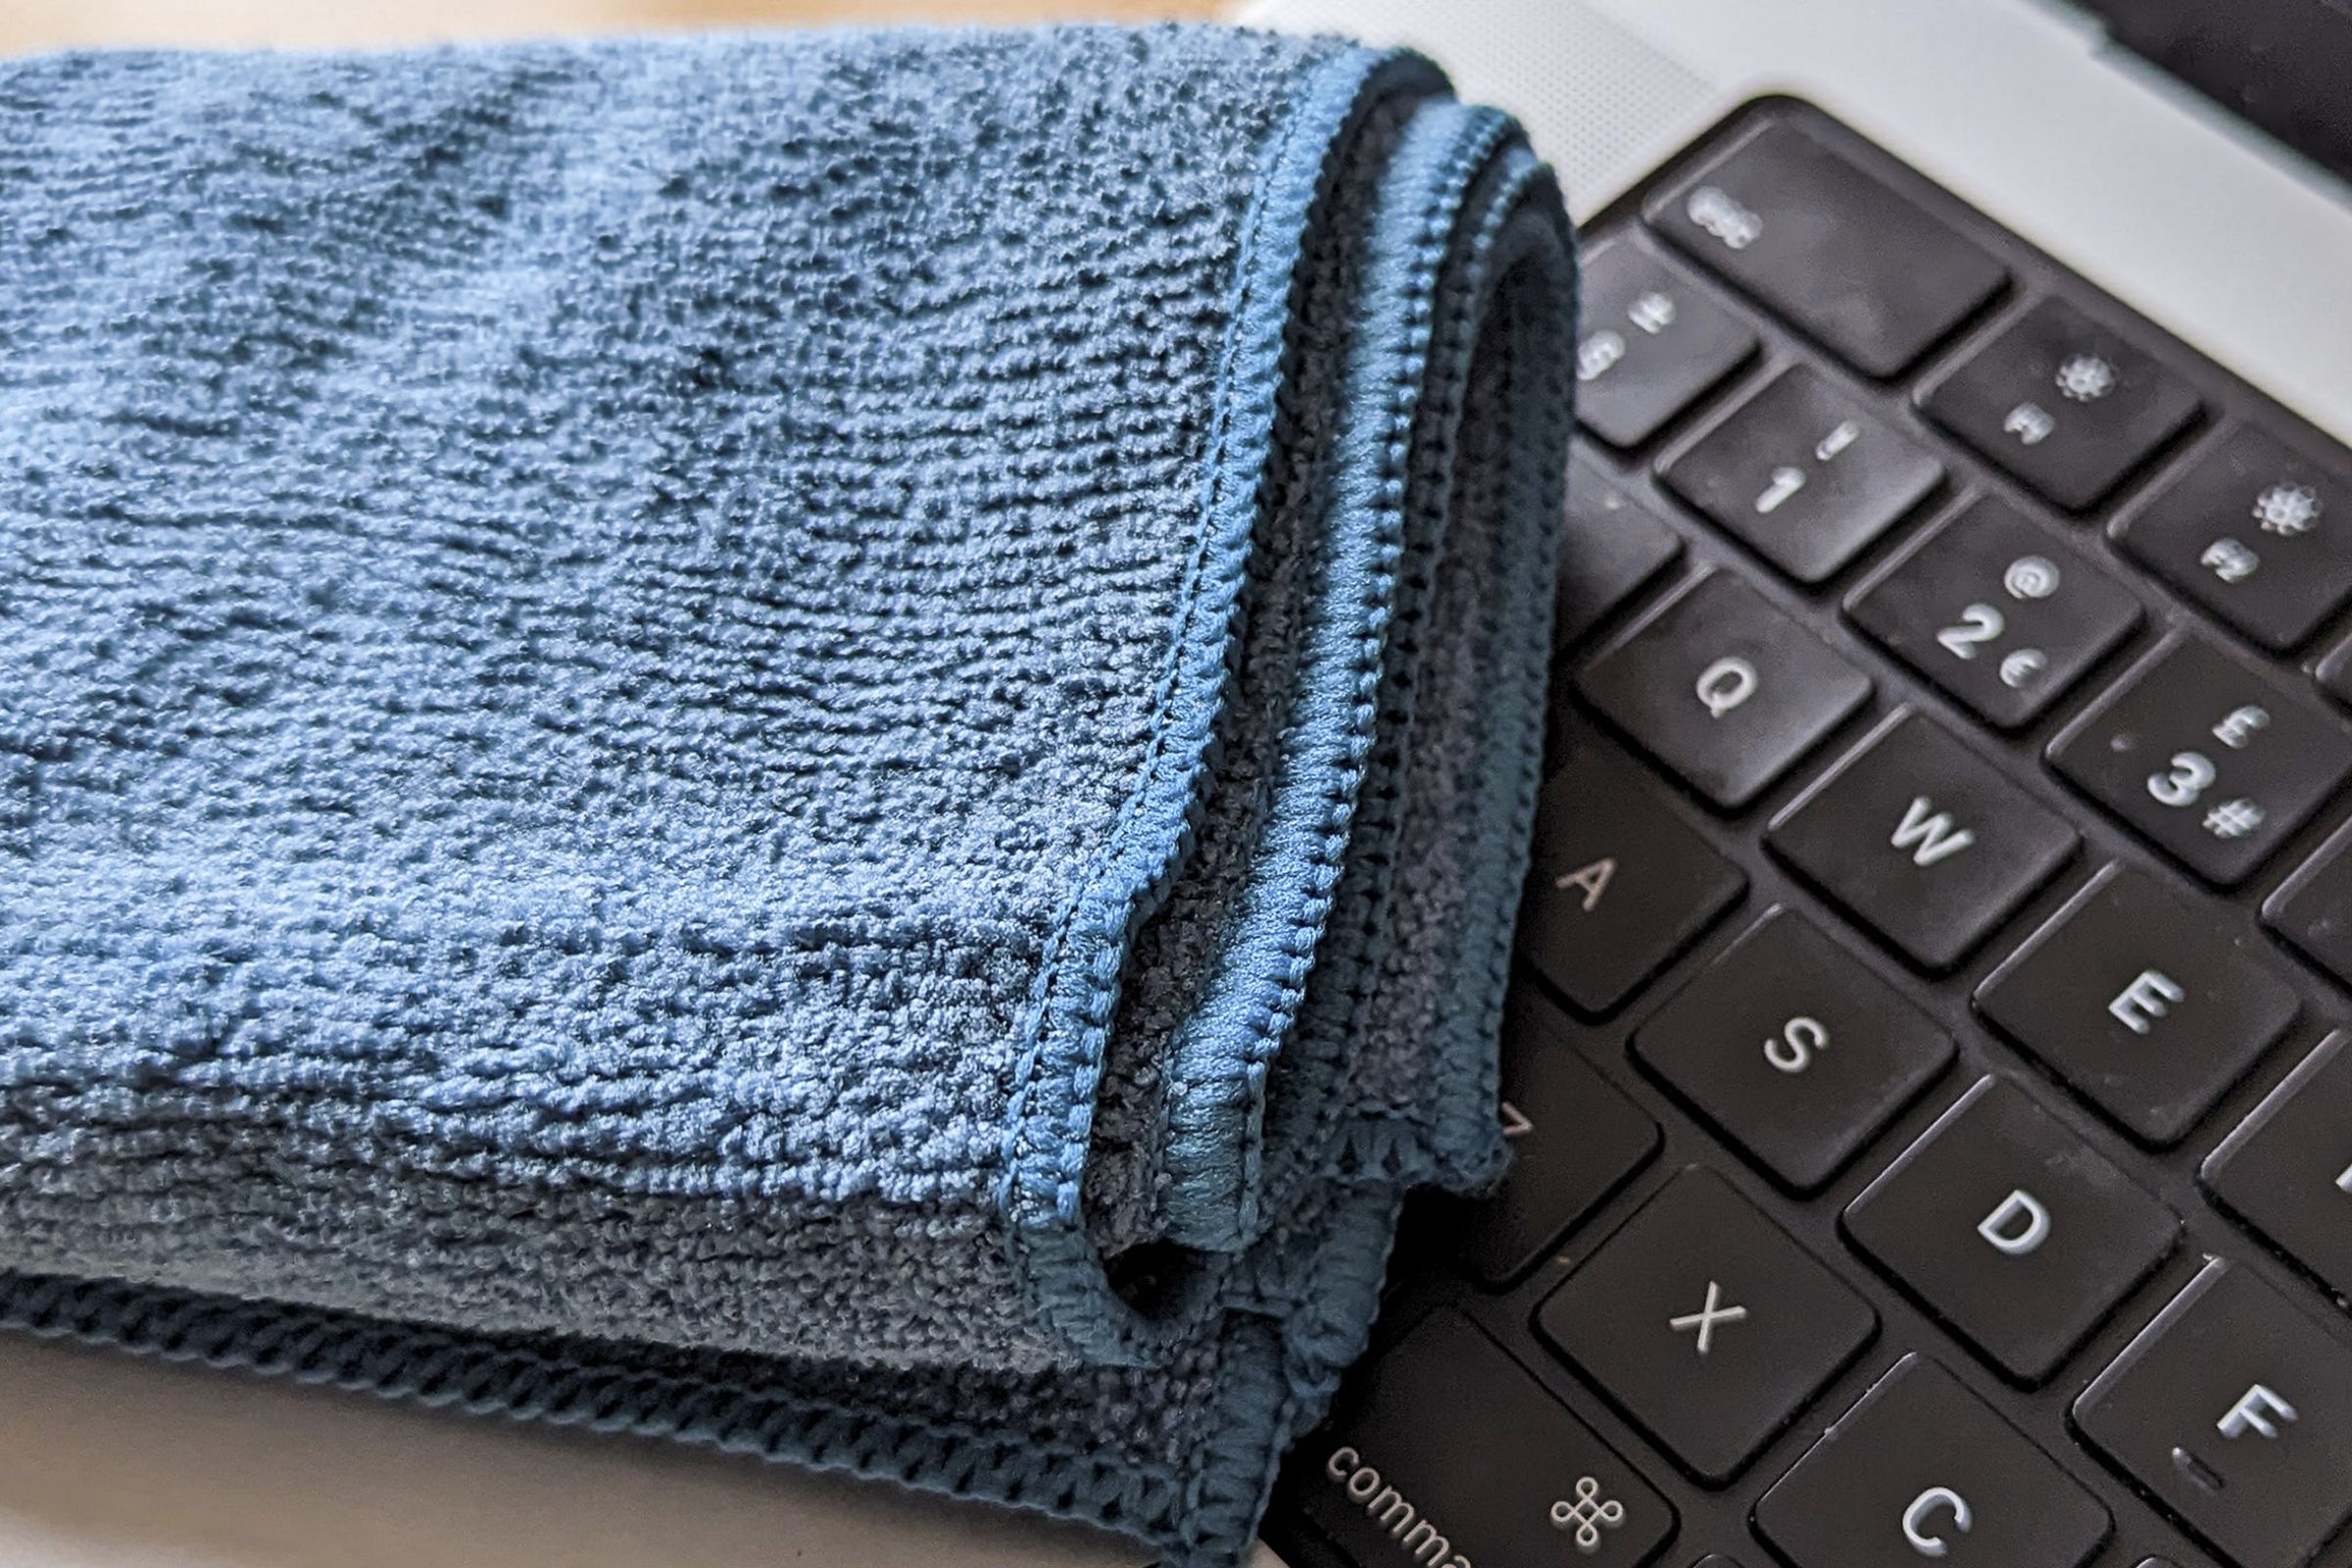 Blue microfiber cloth laying across a keyboard.